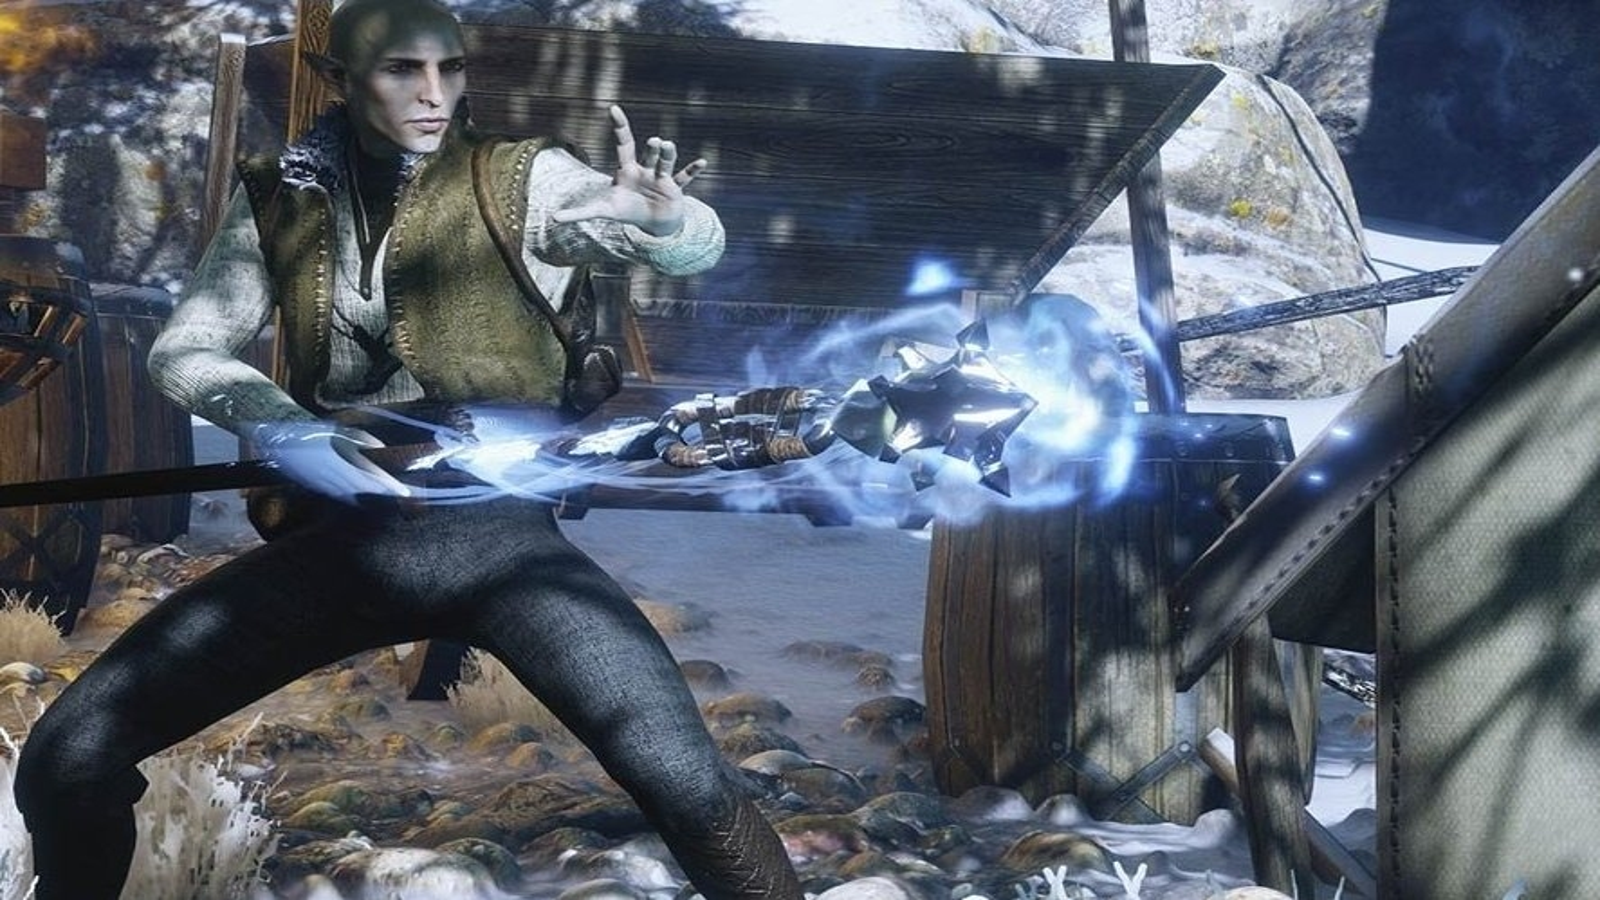 Xbox One Dragon Age Inquisition – Games Crazy Deals